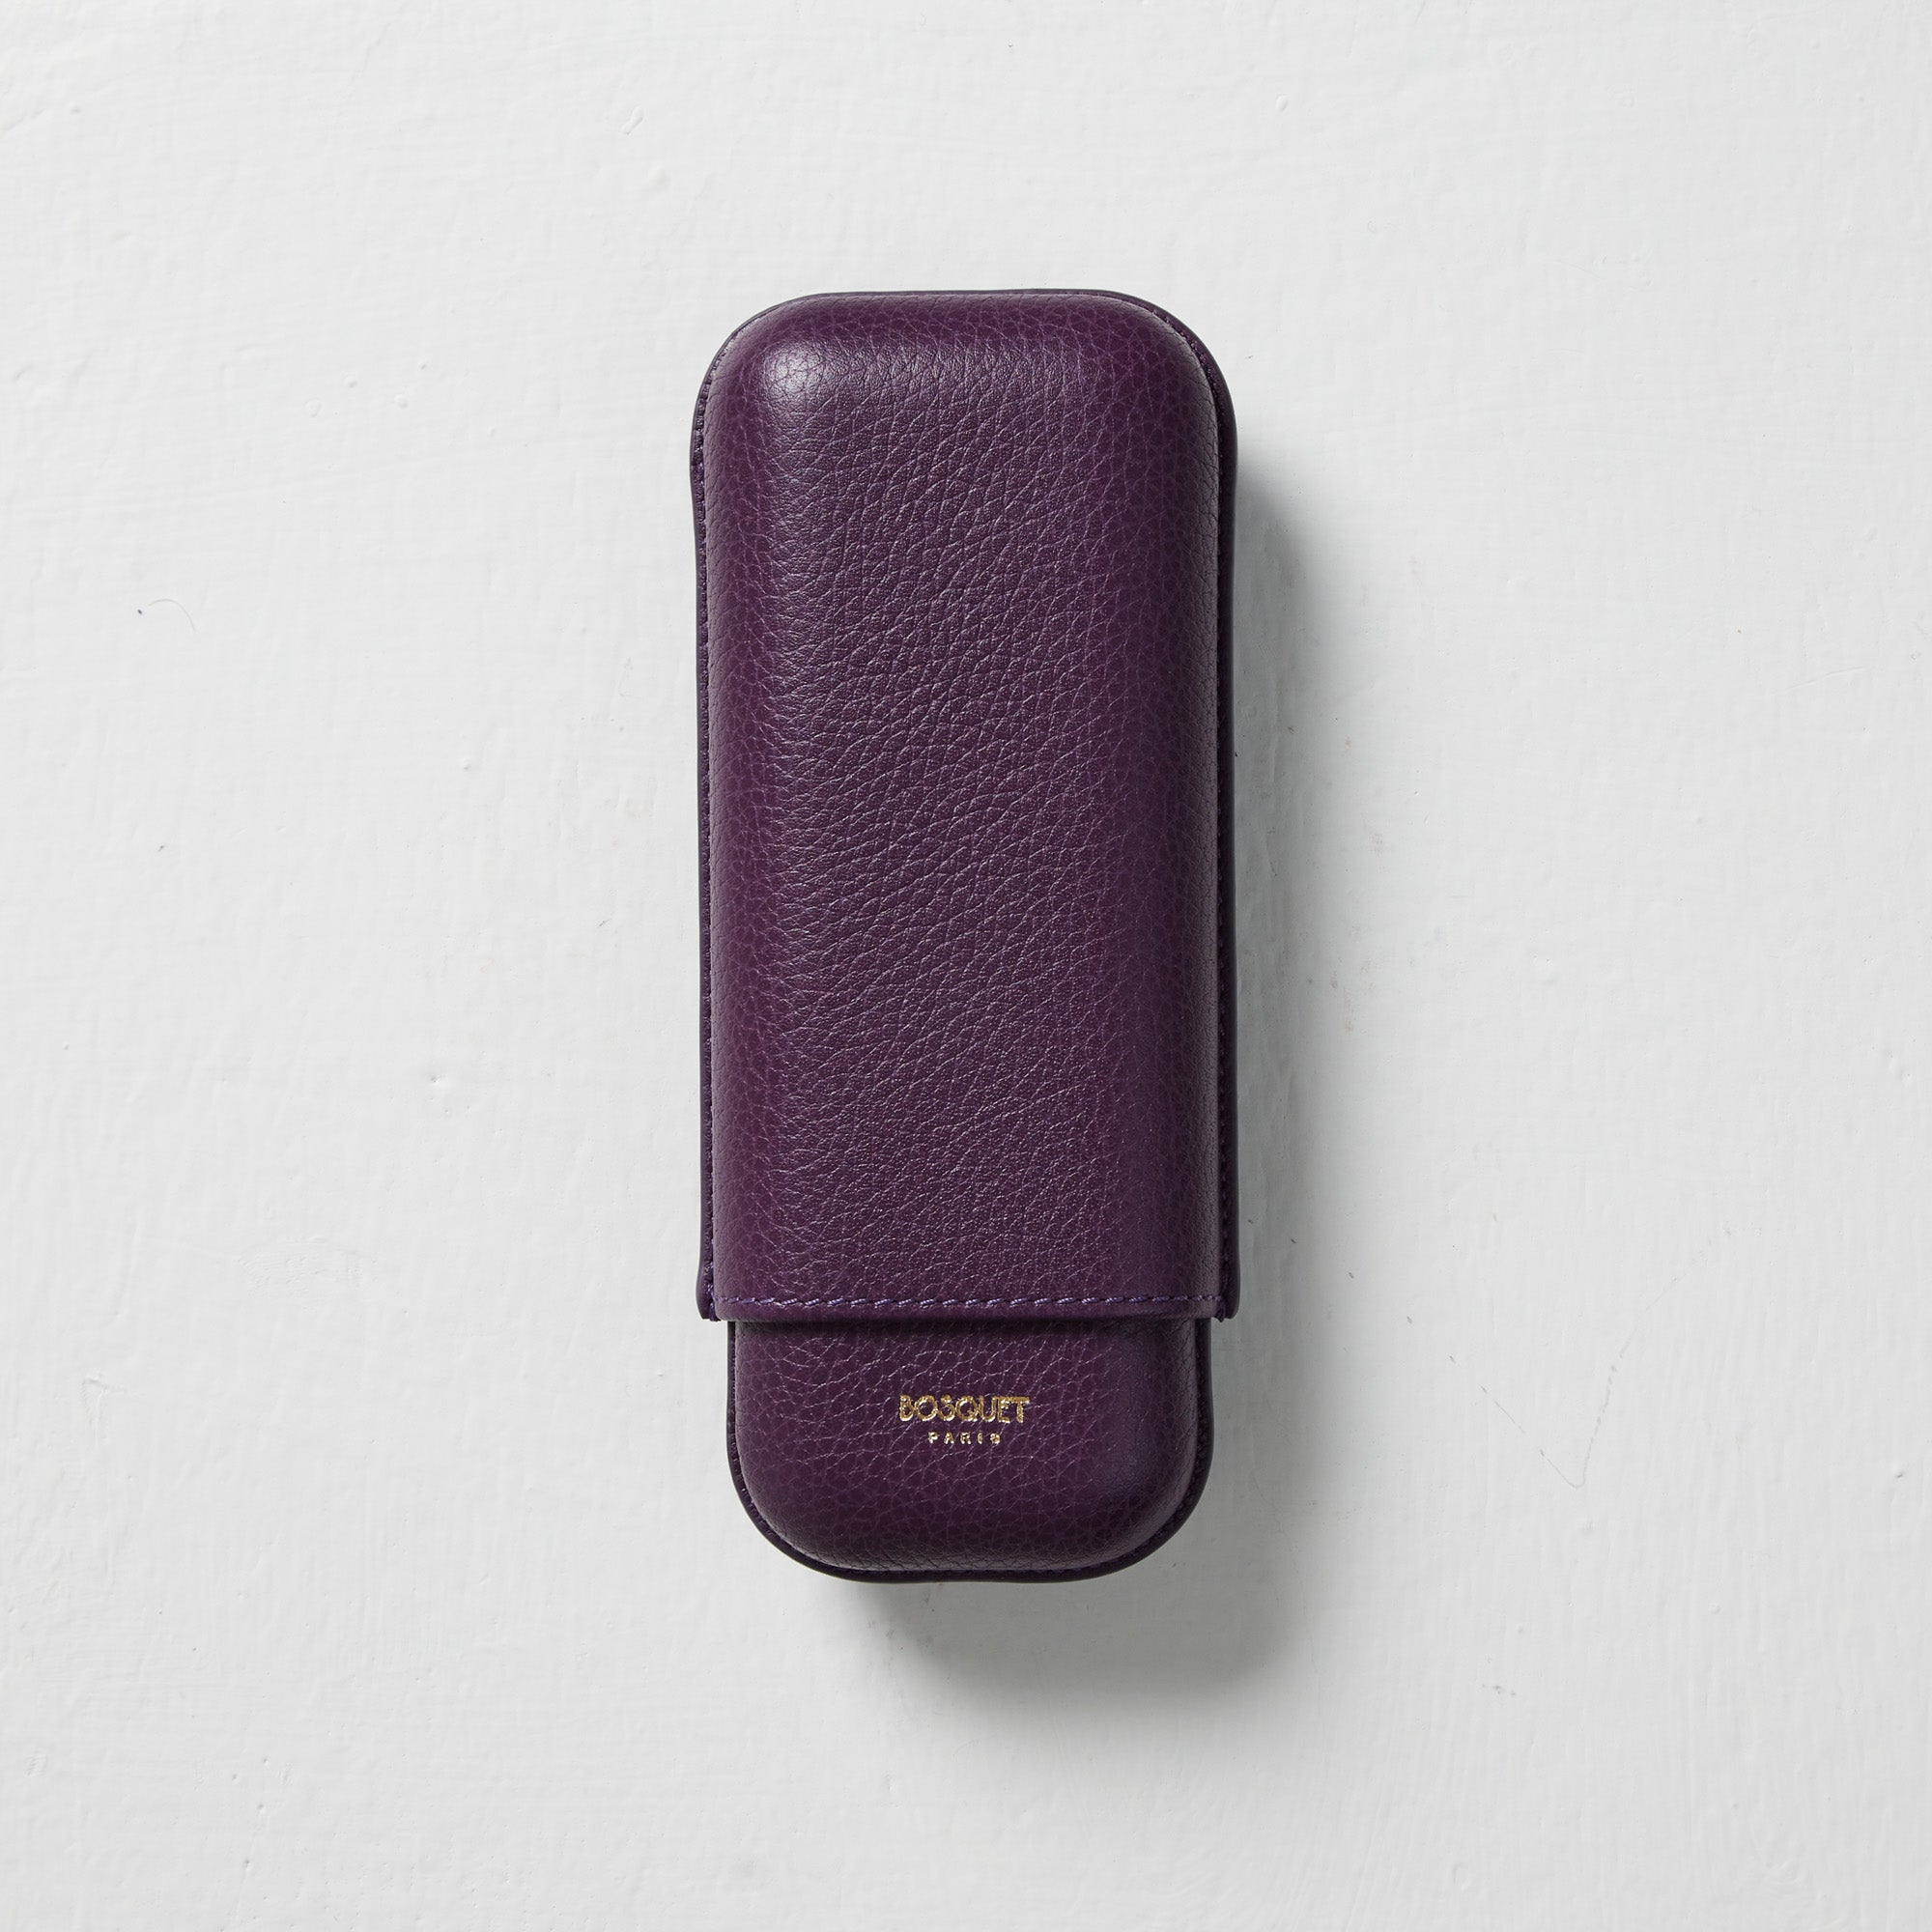 Bosquet Smooth Purple Leather Cigar Case